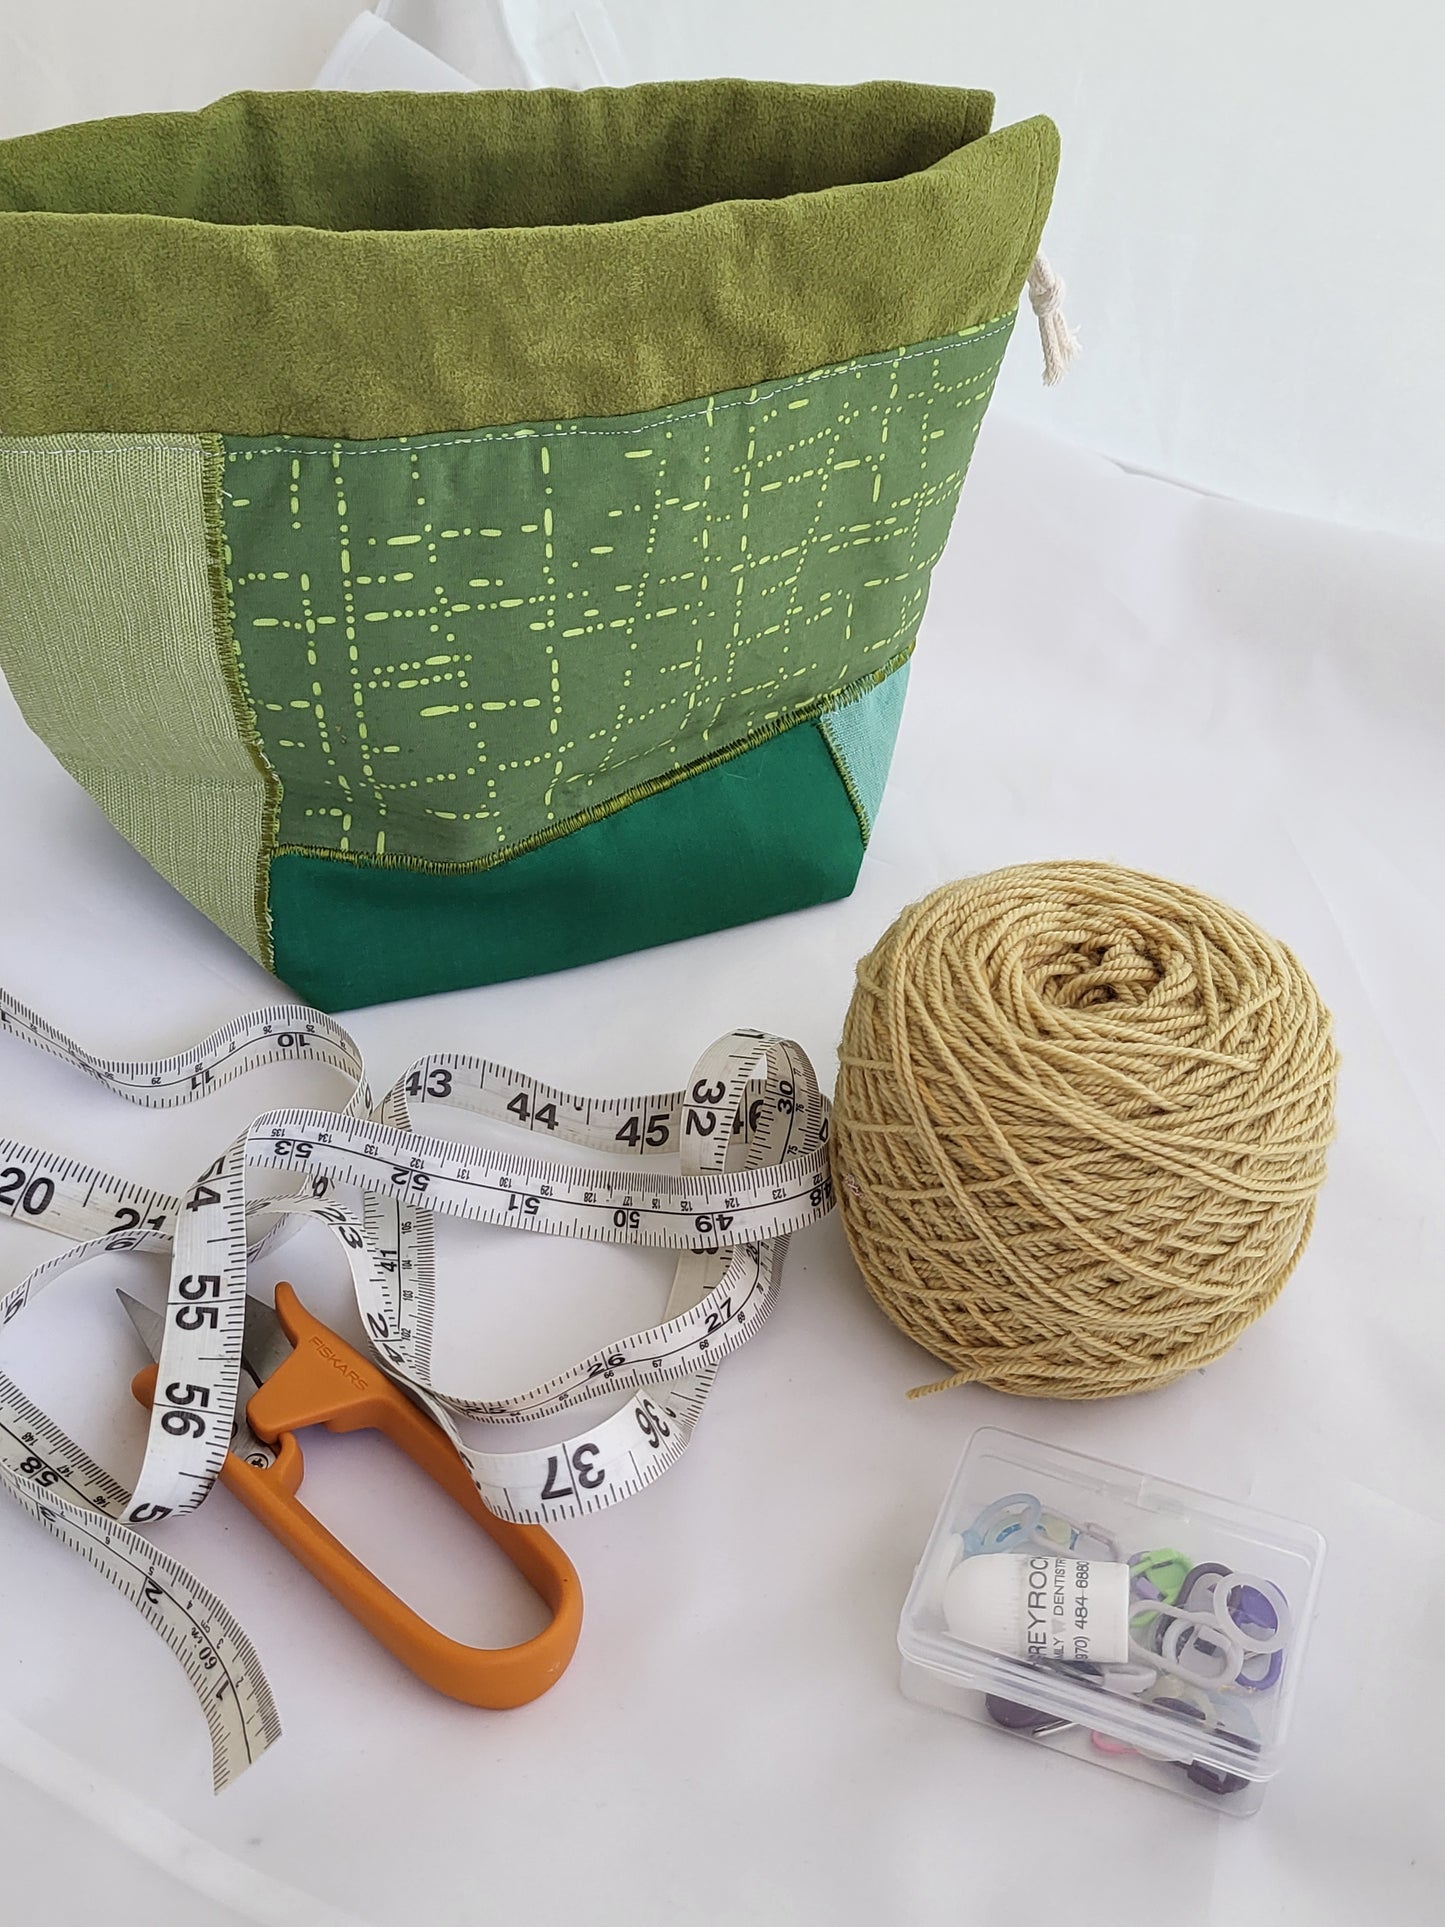 Spring Collage drawstring Sock Sack, Drawstring bag, small project bag, small storage bag